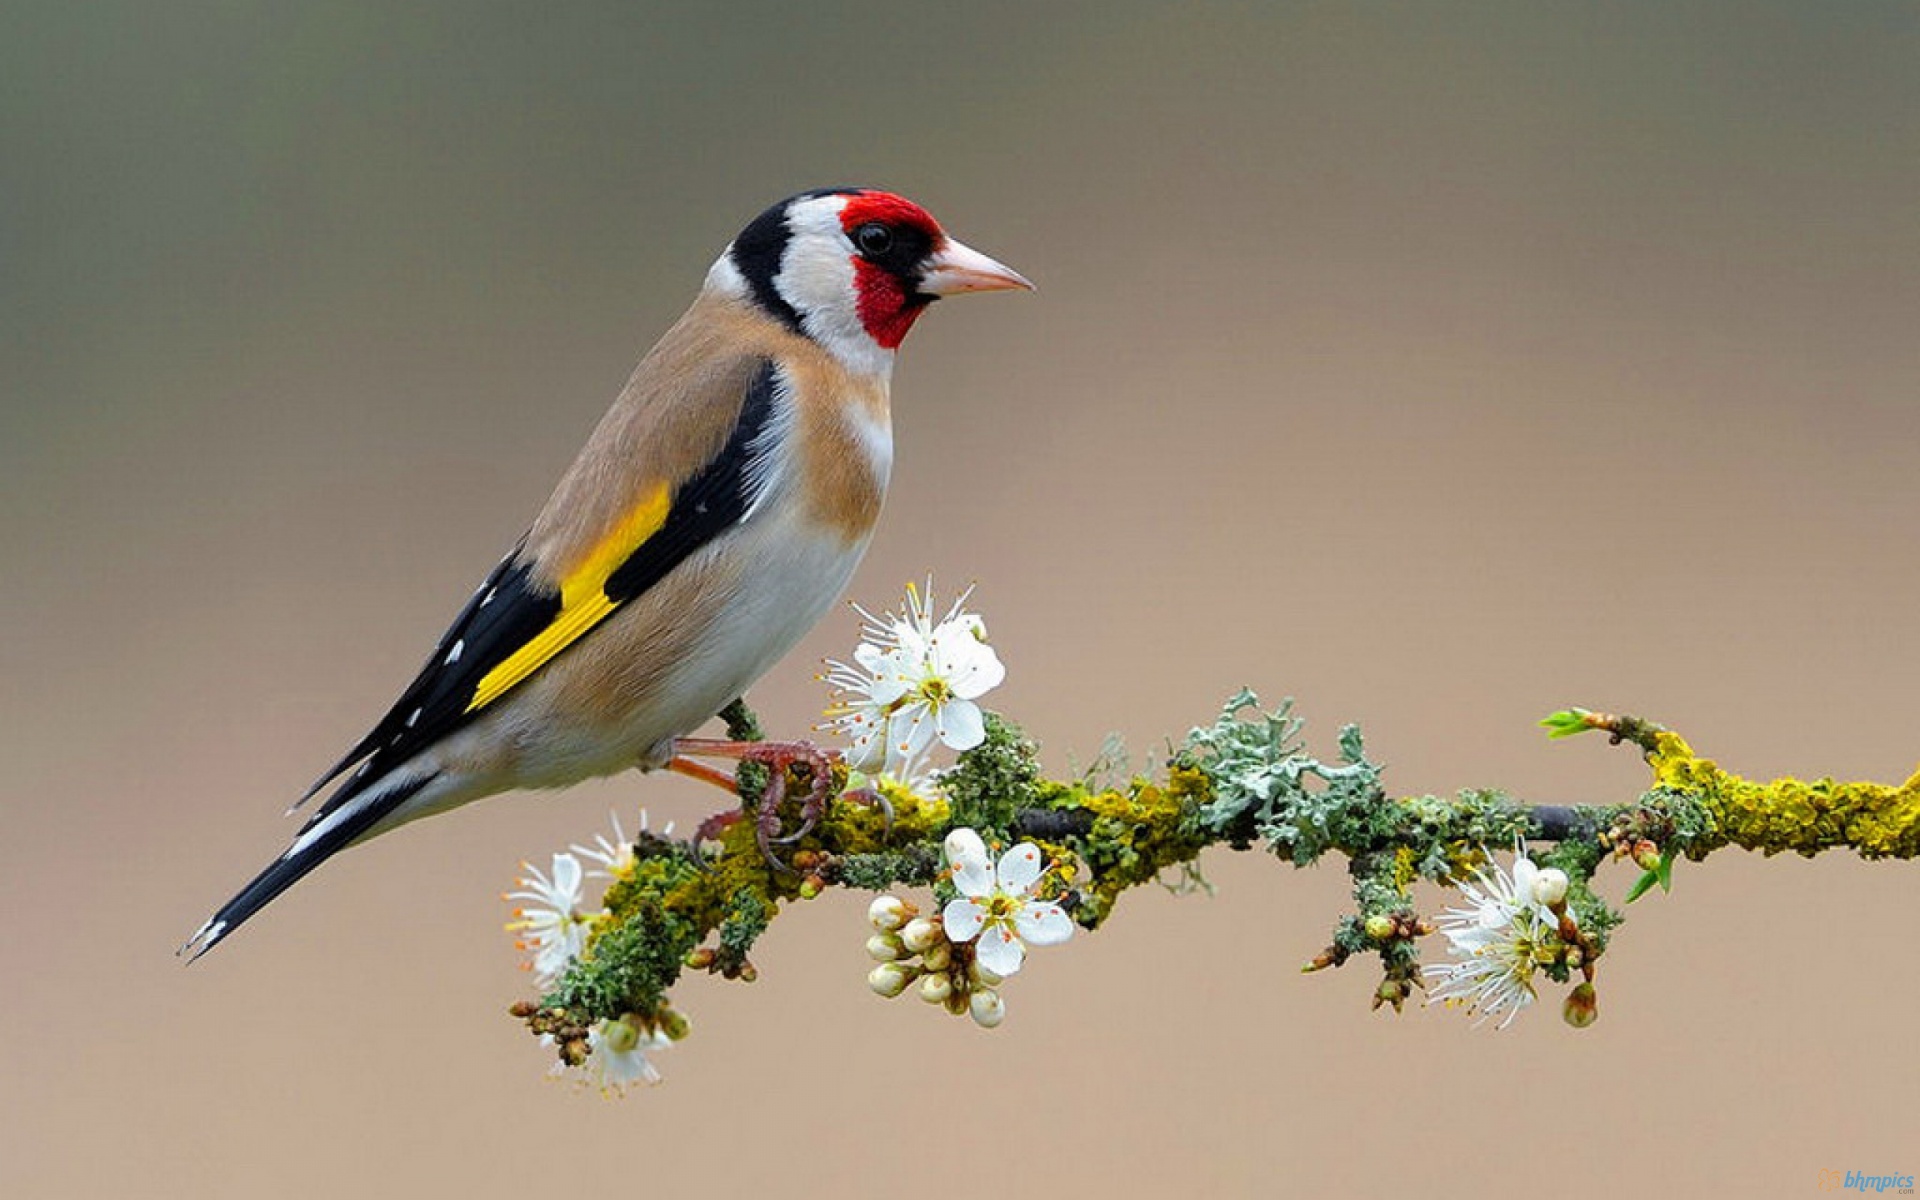 Mobile Desktop Background Colorful Pictures Of Birds Download